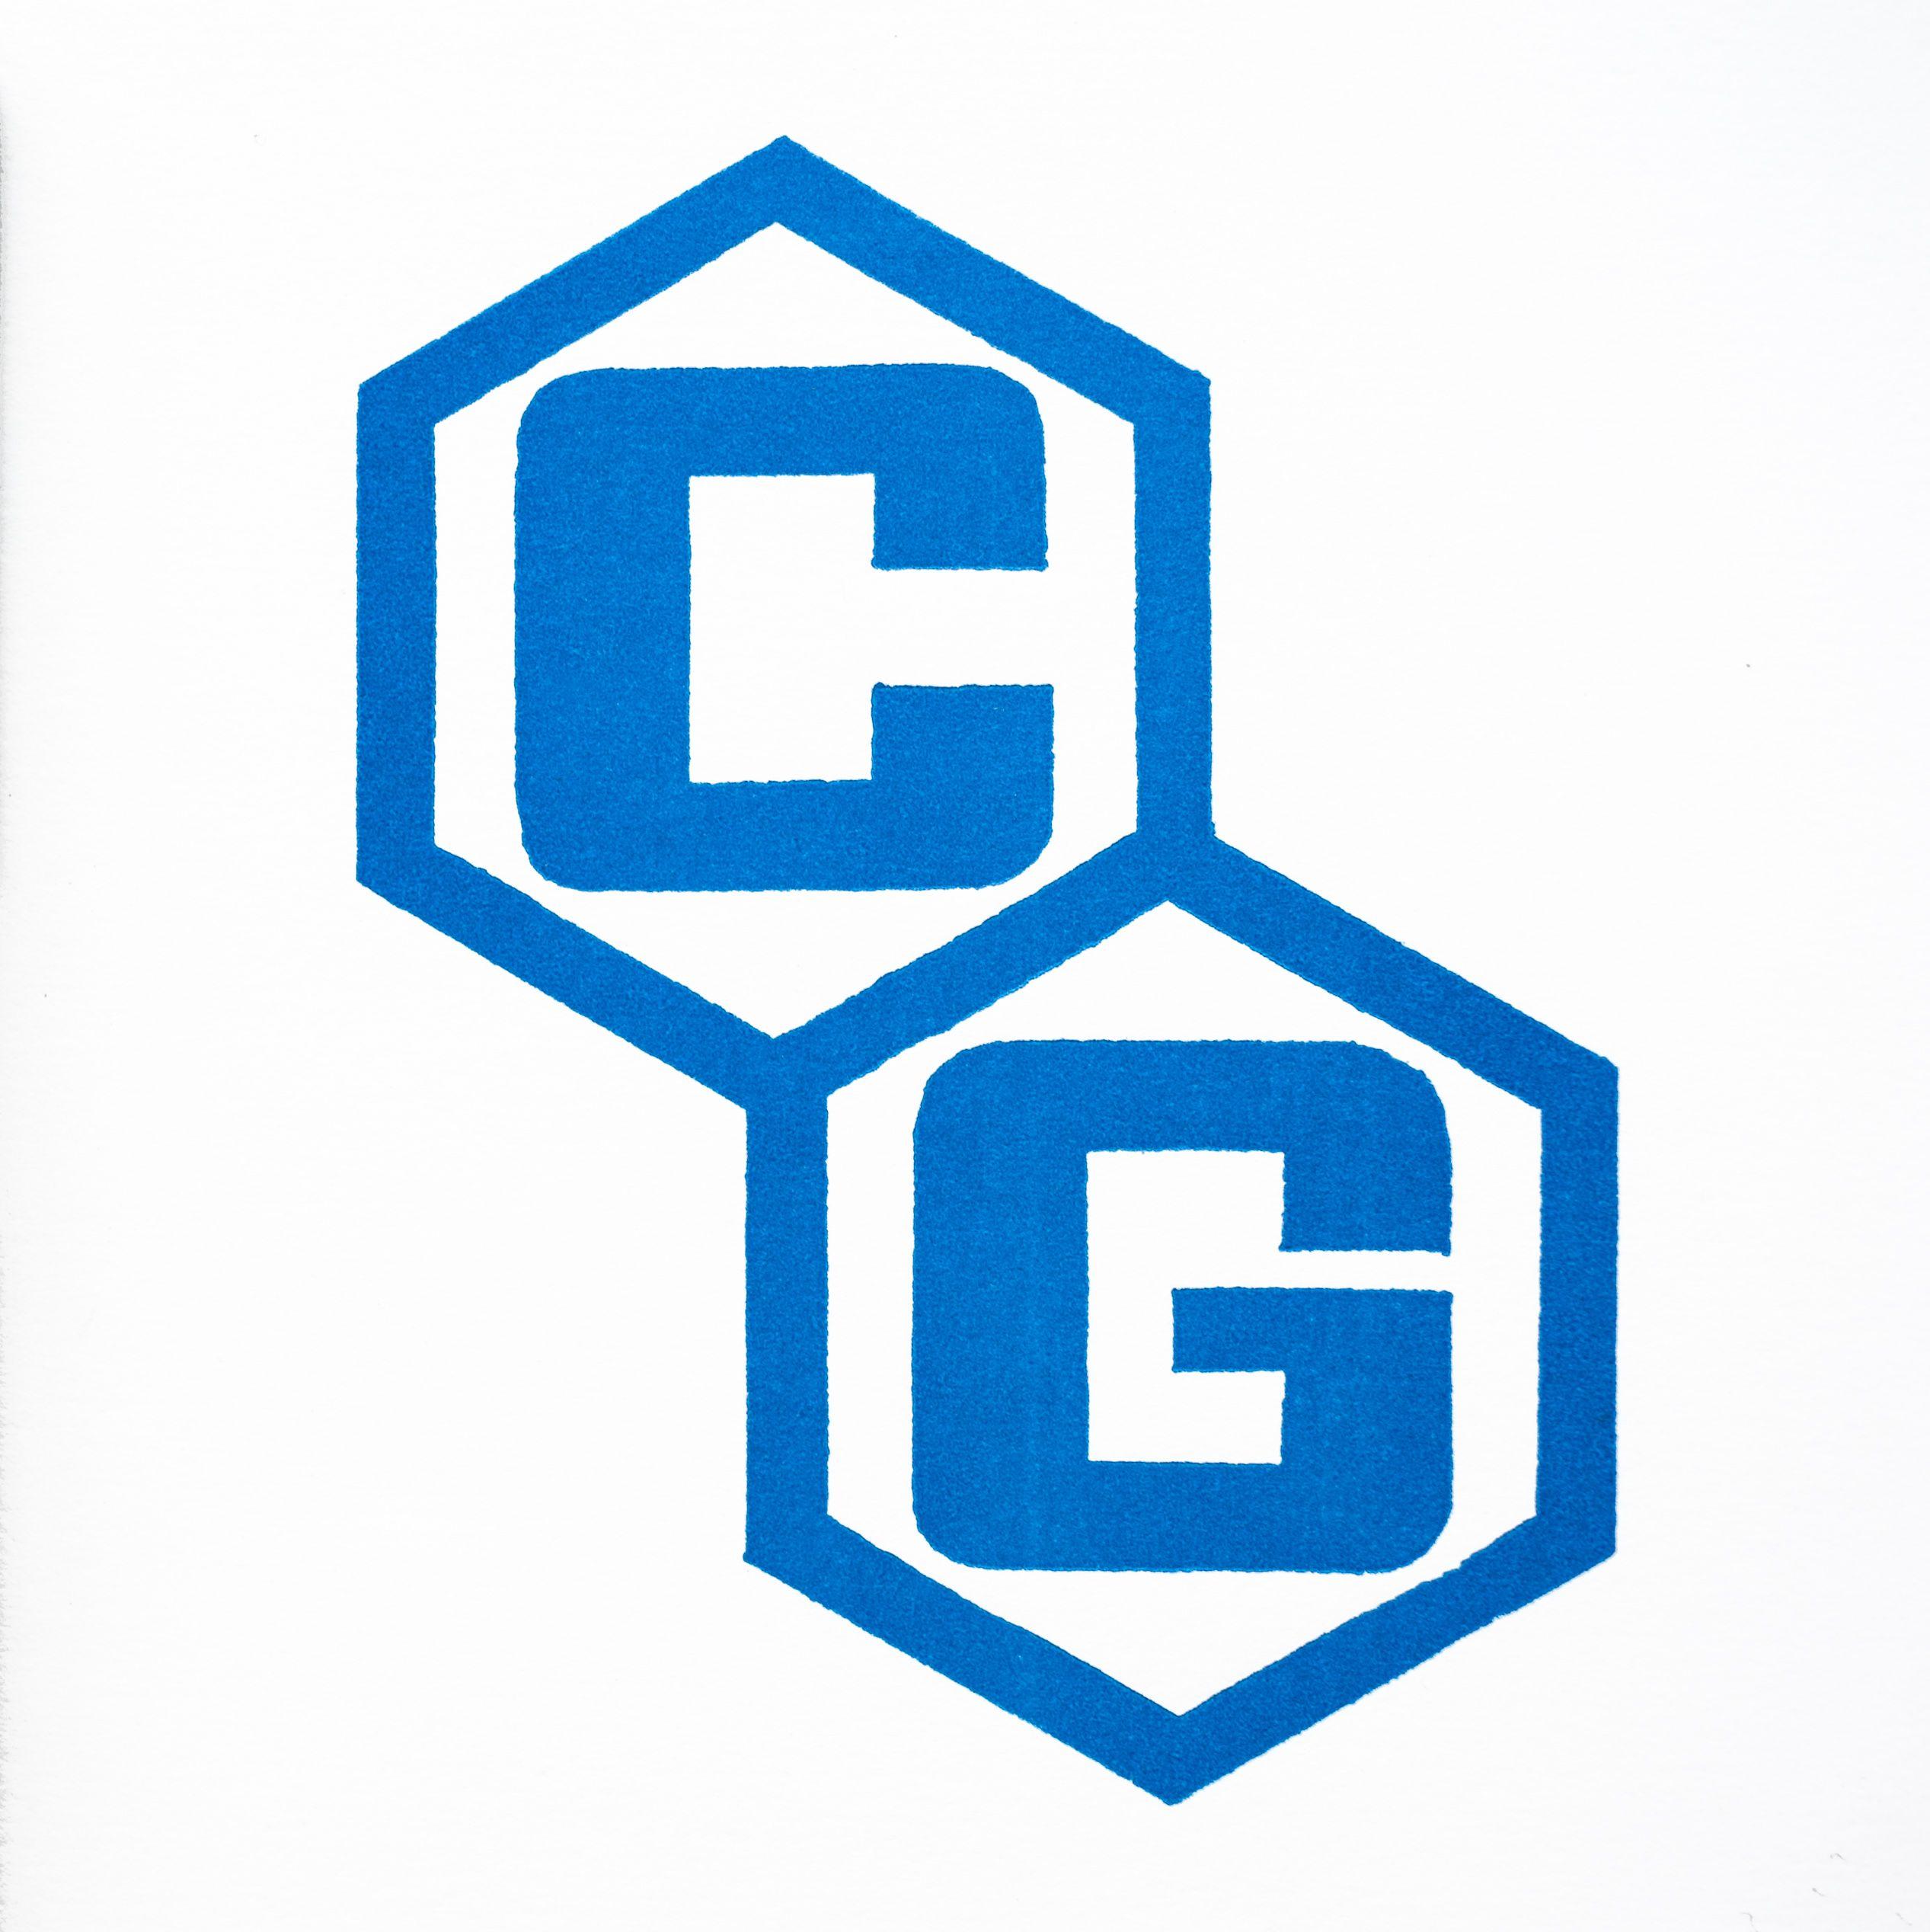 CG Logo - File:CG-Logo FullSize 2534px 300dpi sRGB.jpg - Wikimedia Commons